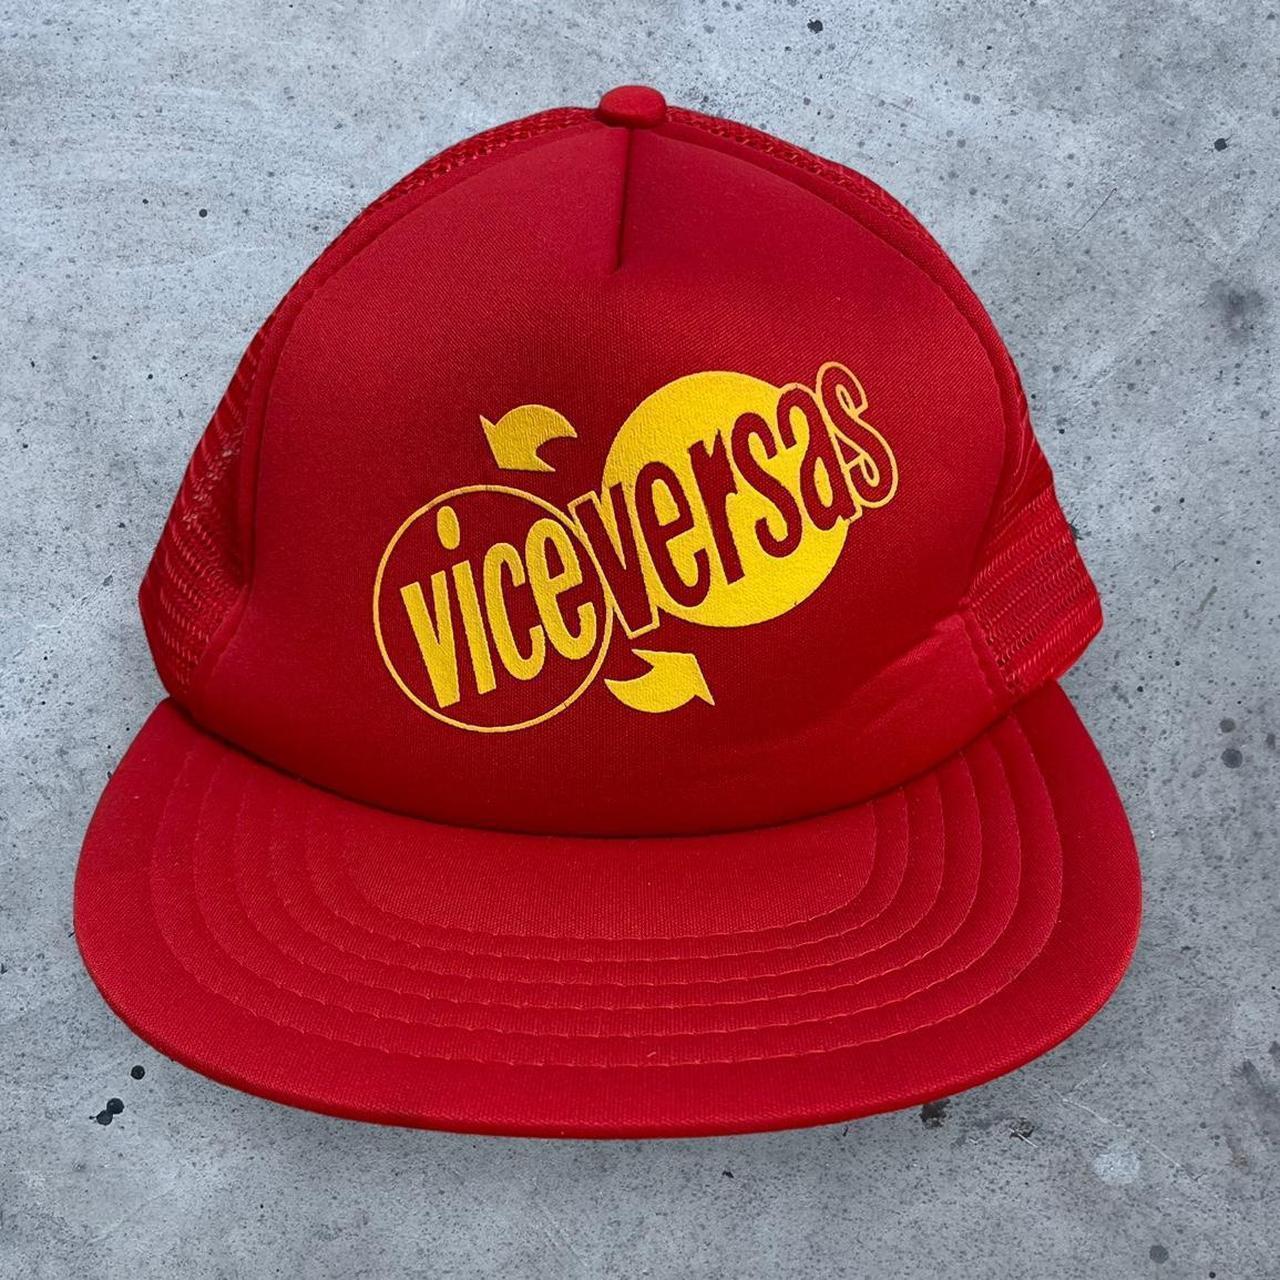 Vintage red trucker cap